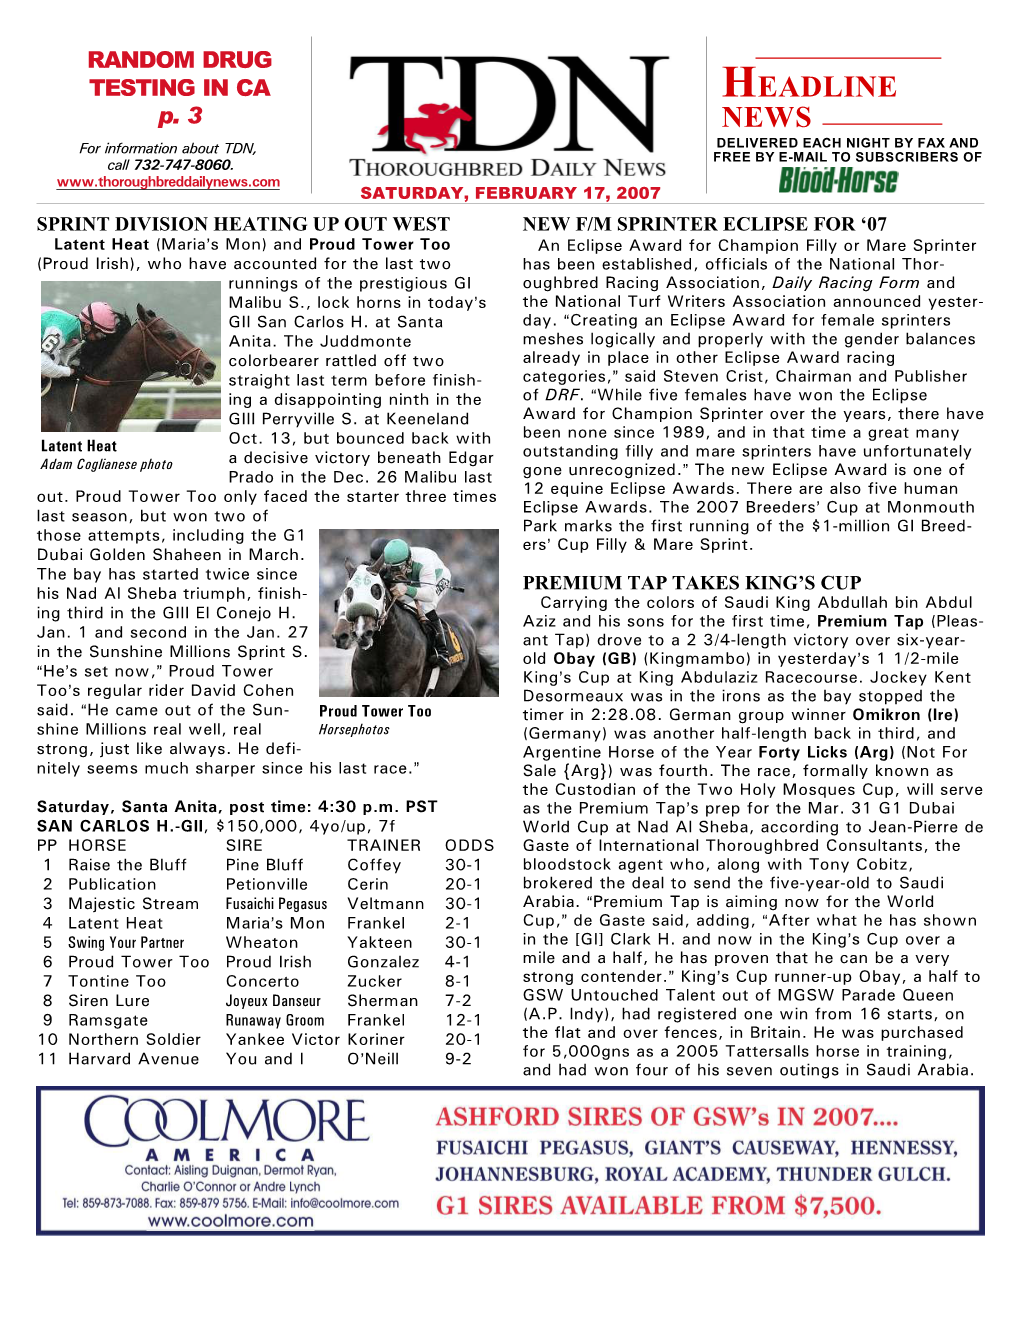 HEADLINE NEWS • 2/17/07 • PAGE 2 of 4